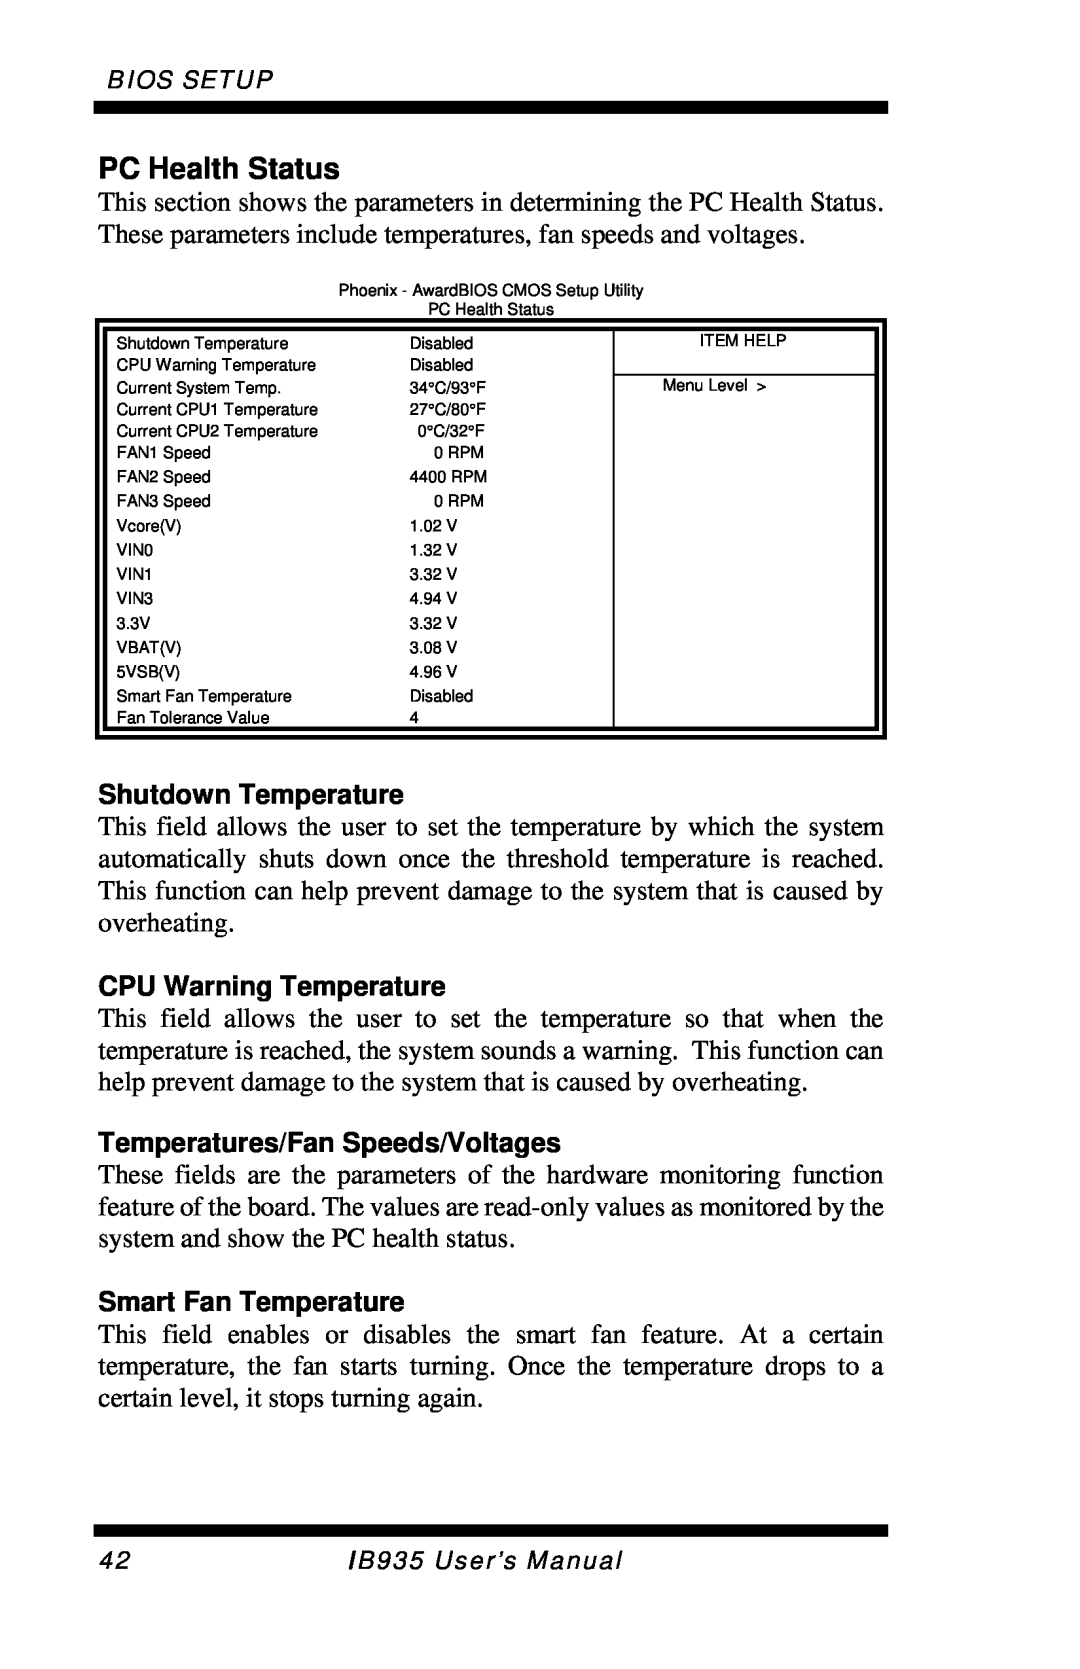 Intel IB935 user manual PC Health Status, Shutdown Temperature, CPU Warning Temperature, Temperatures/Fan Speeds/Voltages 